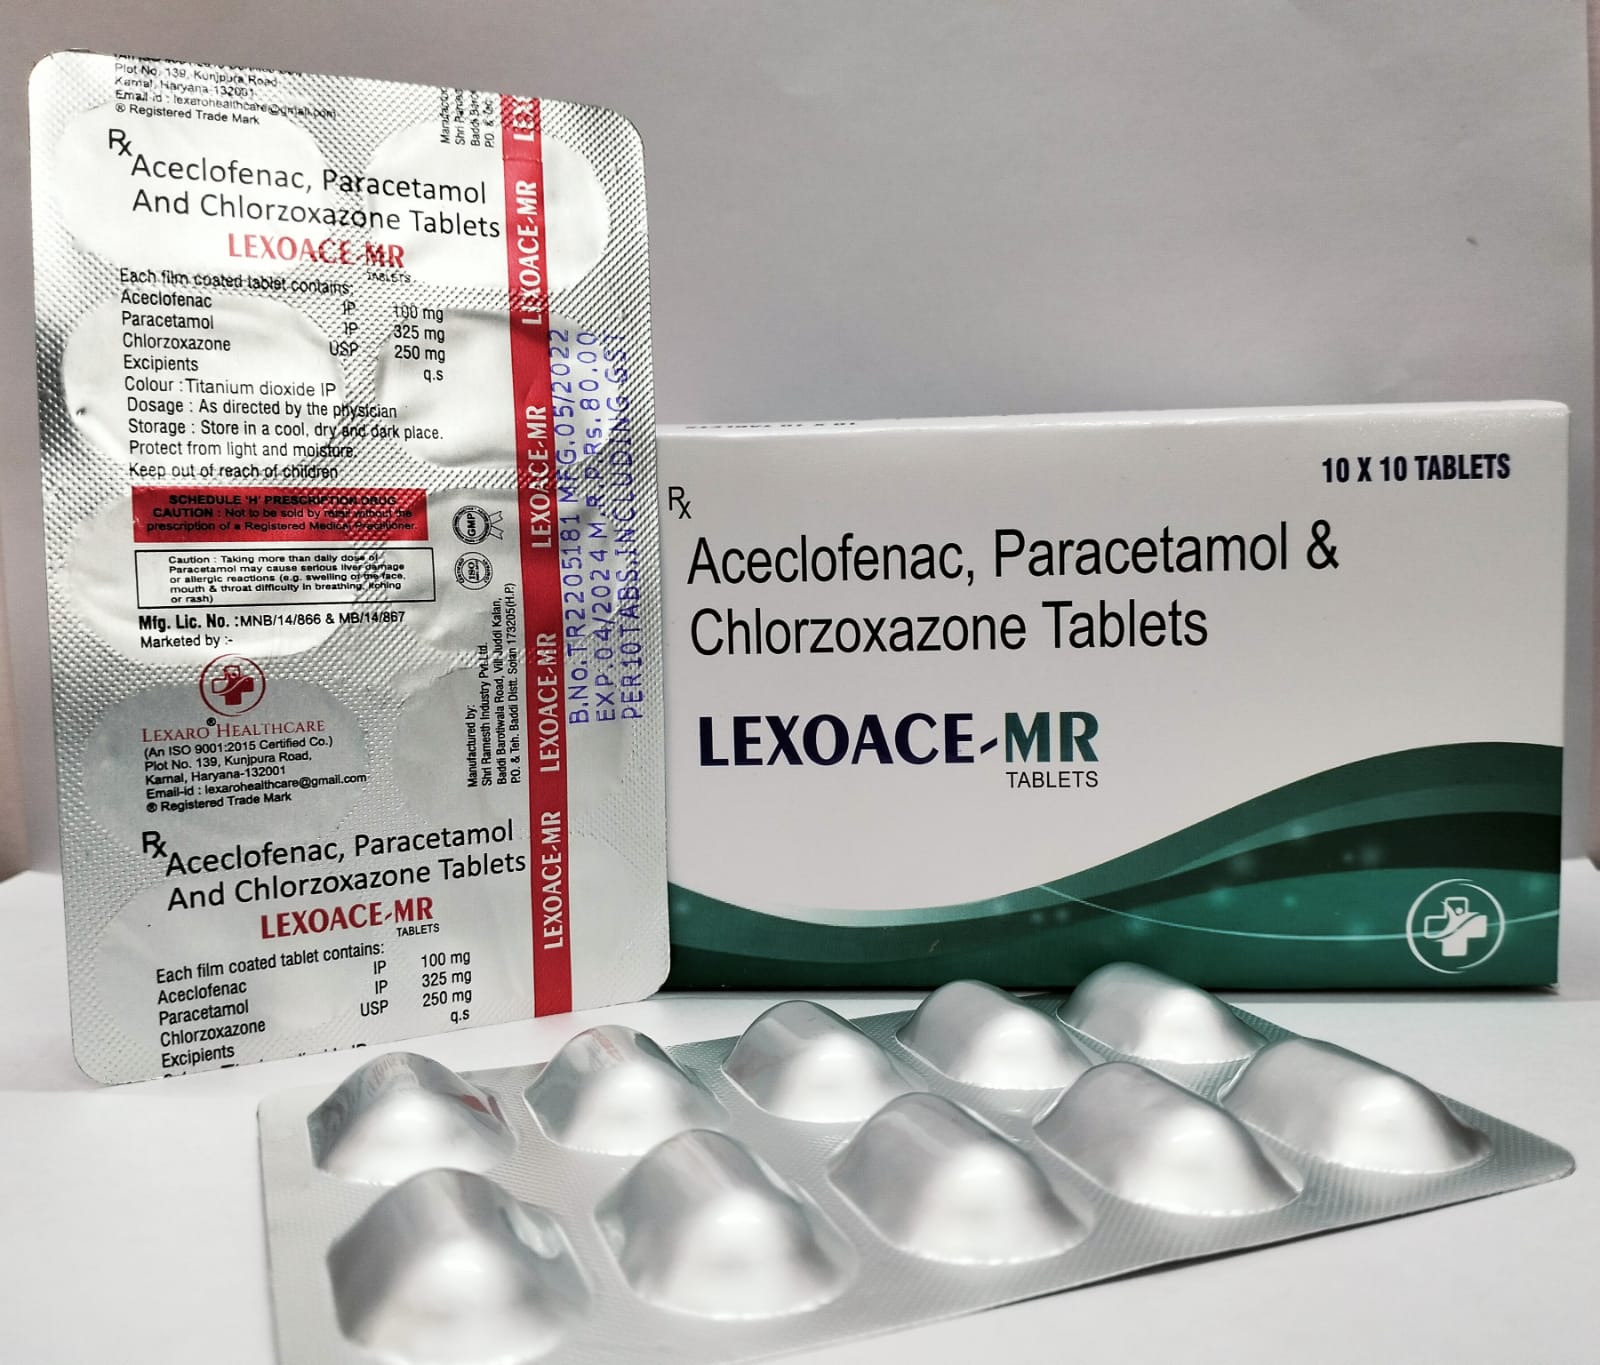 aceclofenac 100 mg + paracetamol 325 mg
+ chlorzoxazone 250 mg